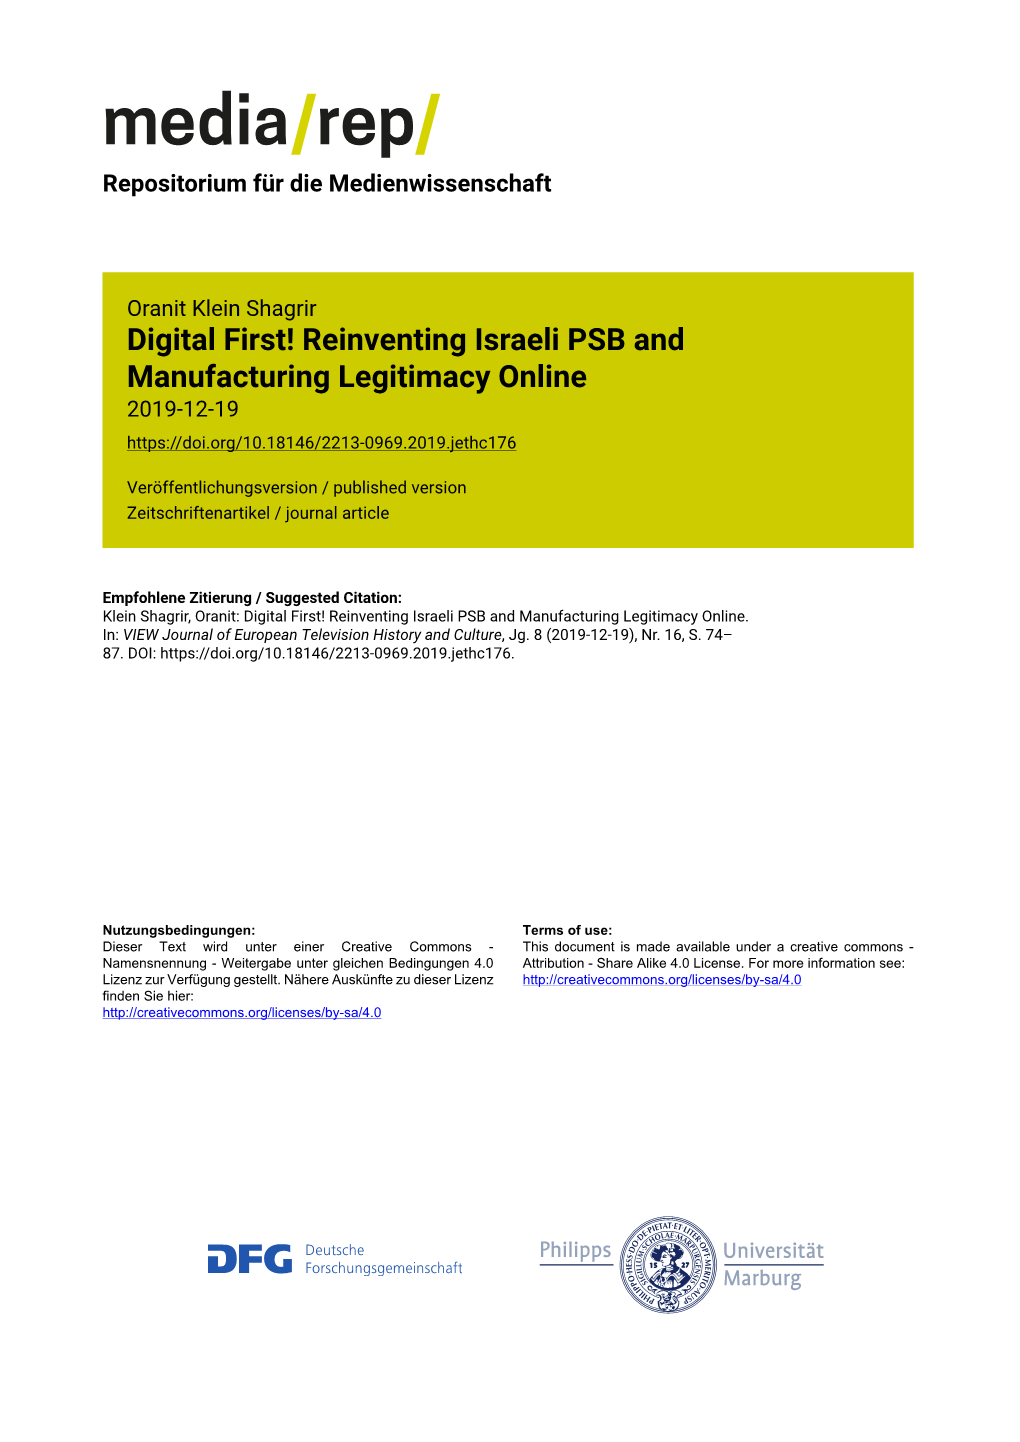 Reinventing Israeli PSB and Manufacturing Legitimacy Online 2019-12-19